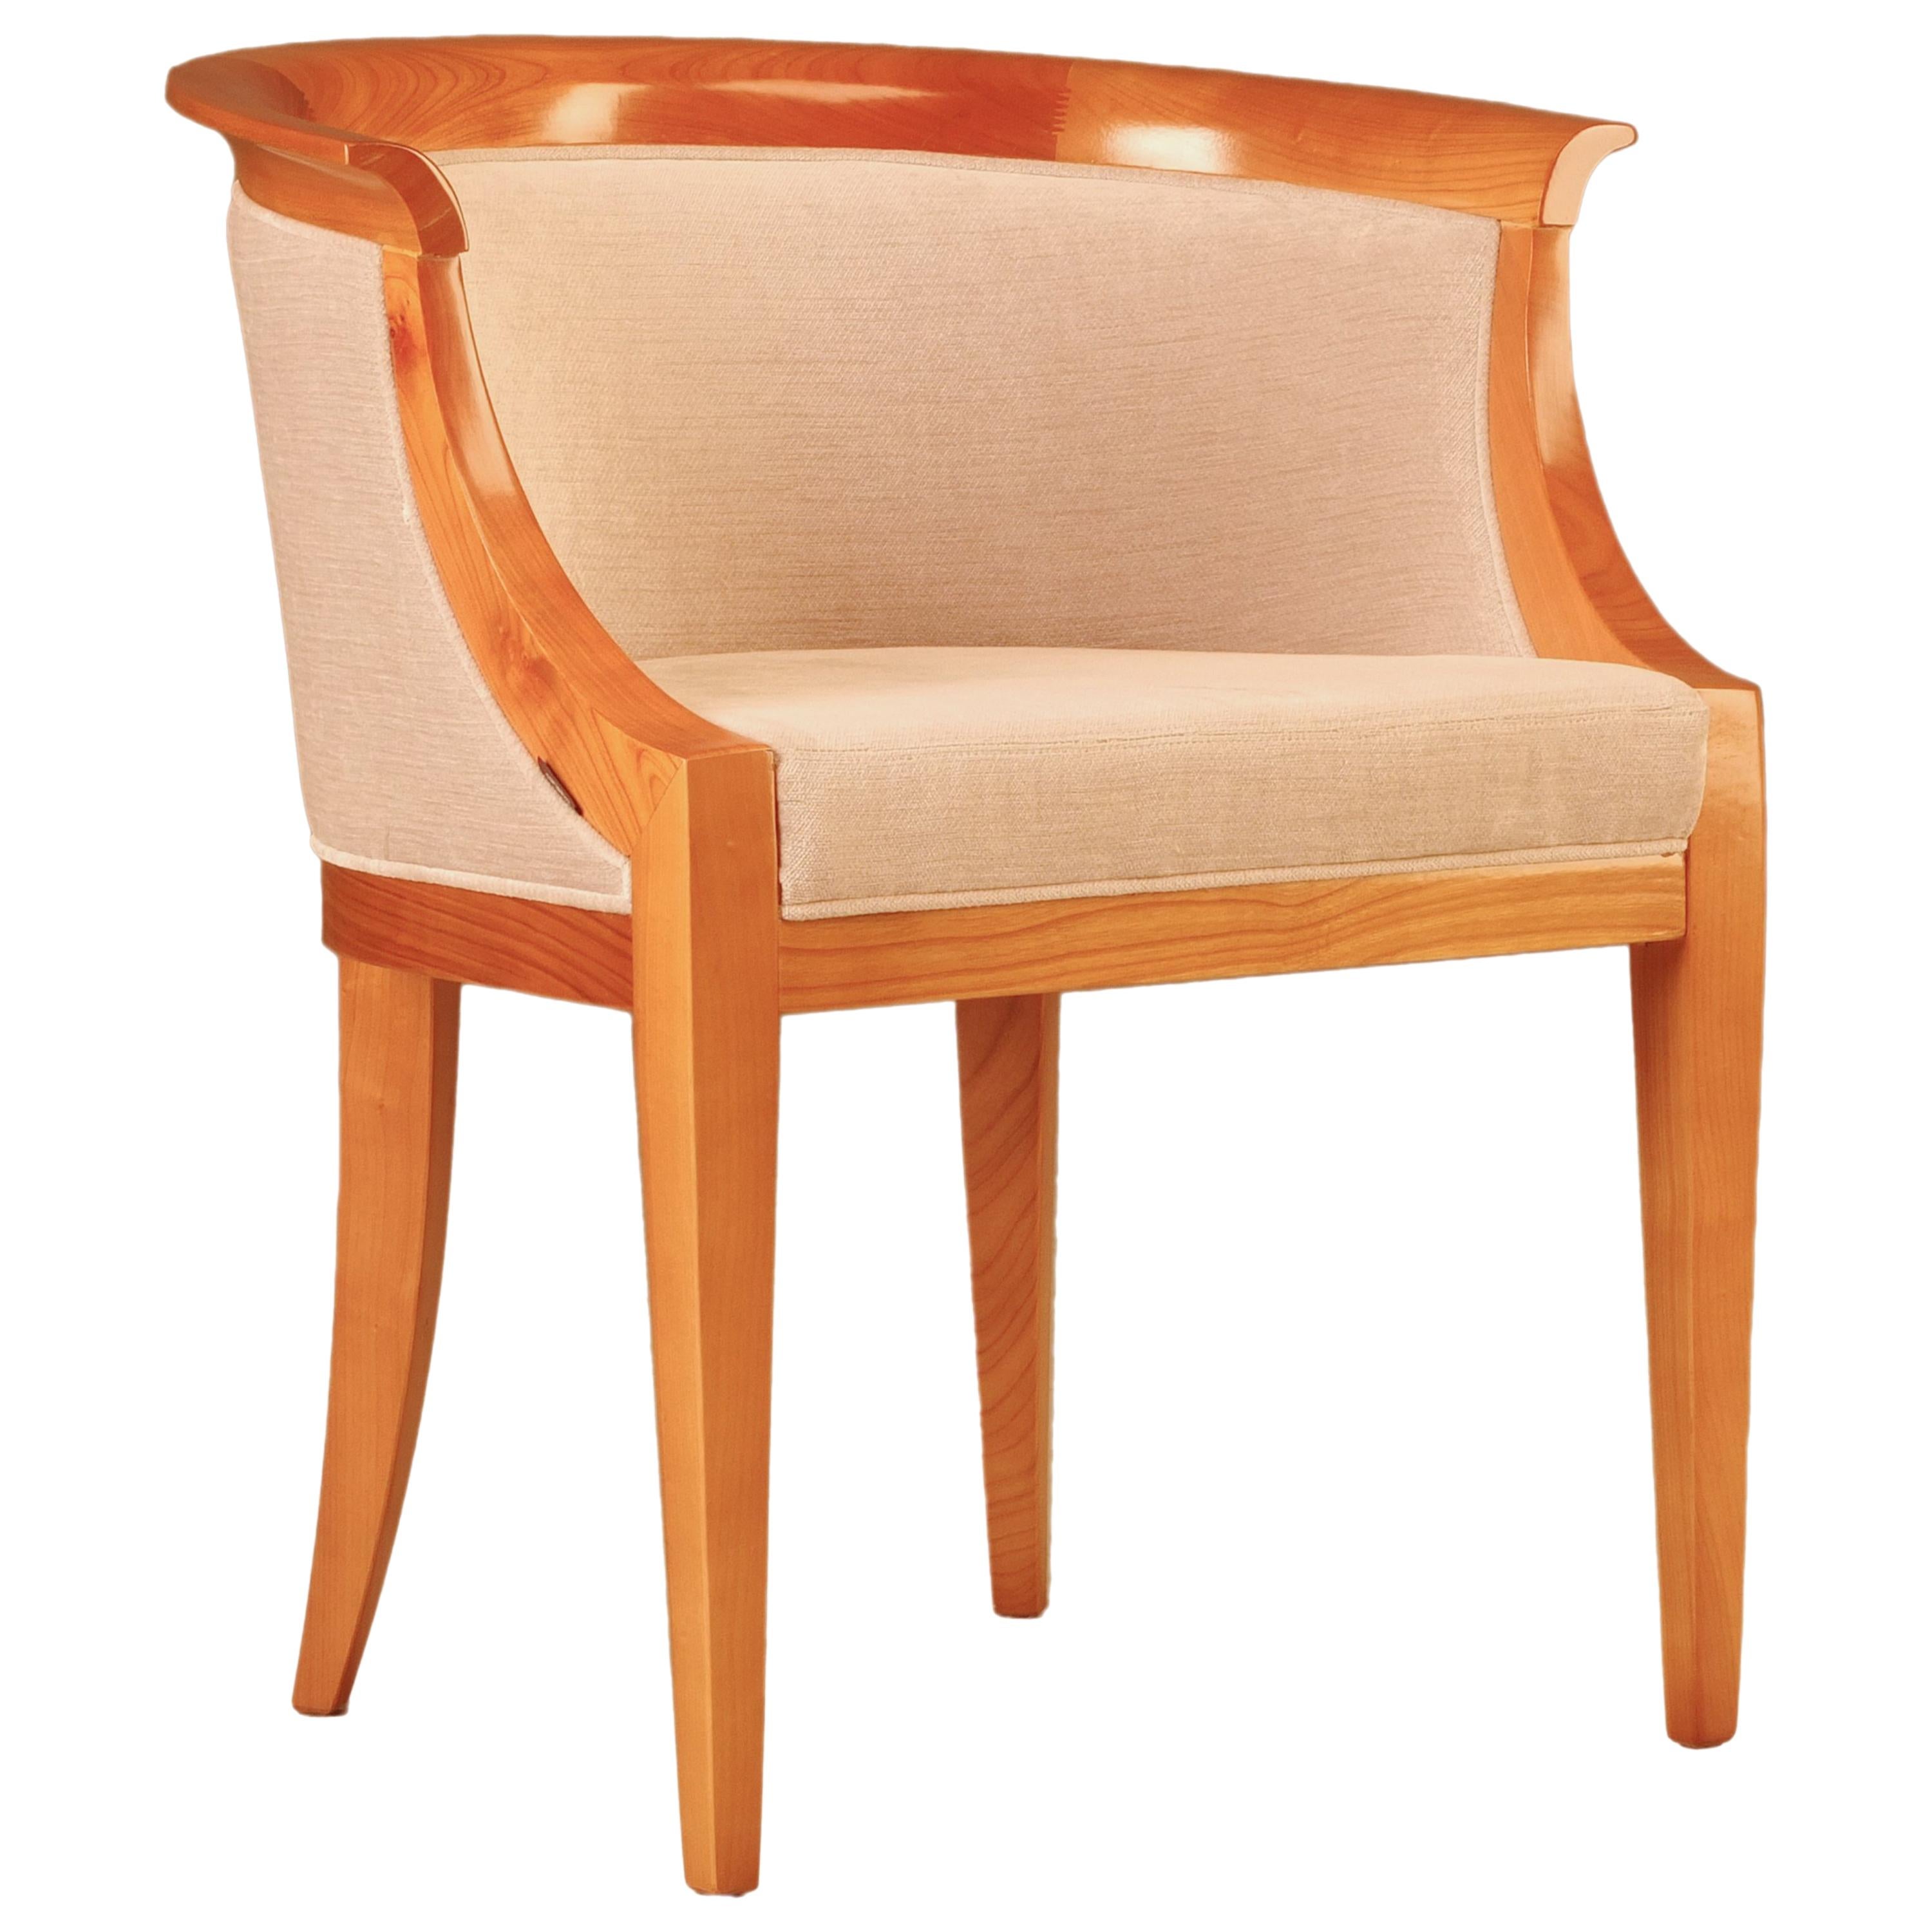 Upholstered Armchair in Biedermeier Style Made of Cherrywood, by Morelato